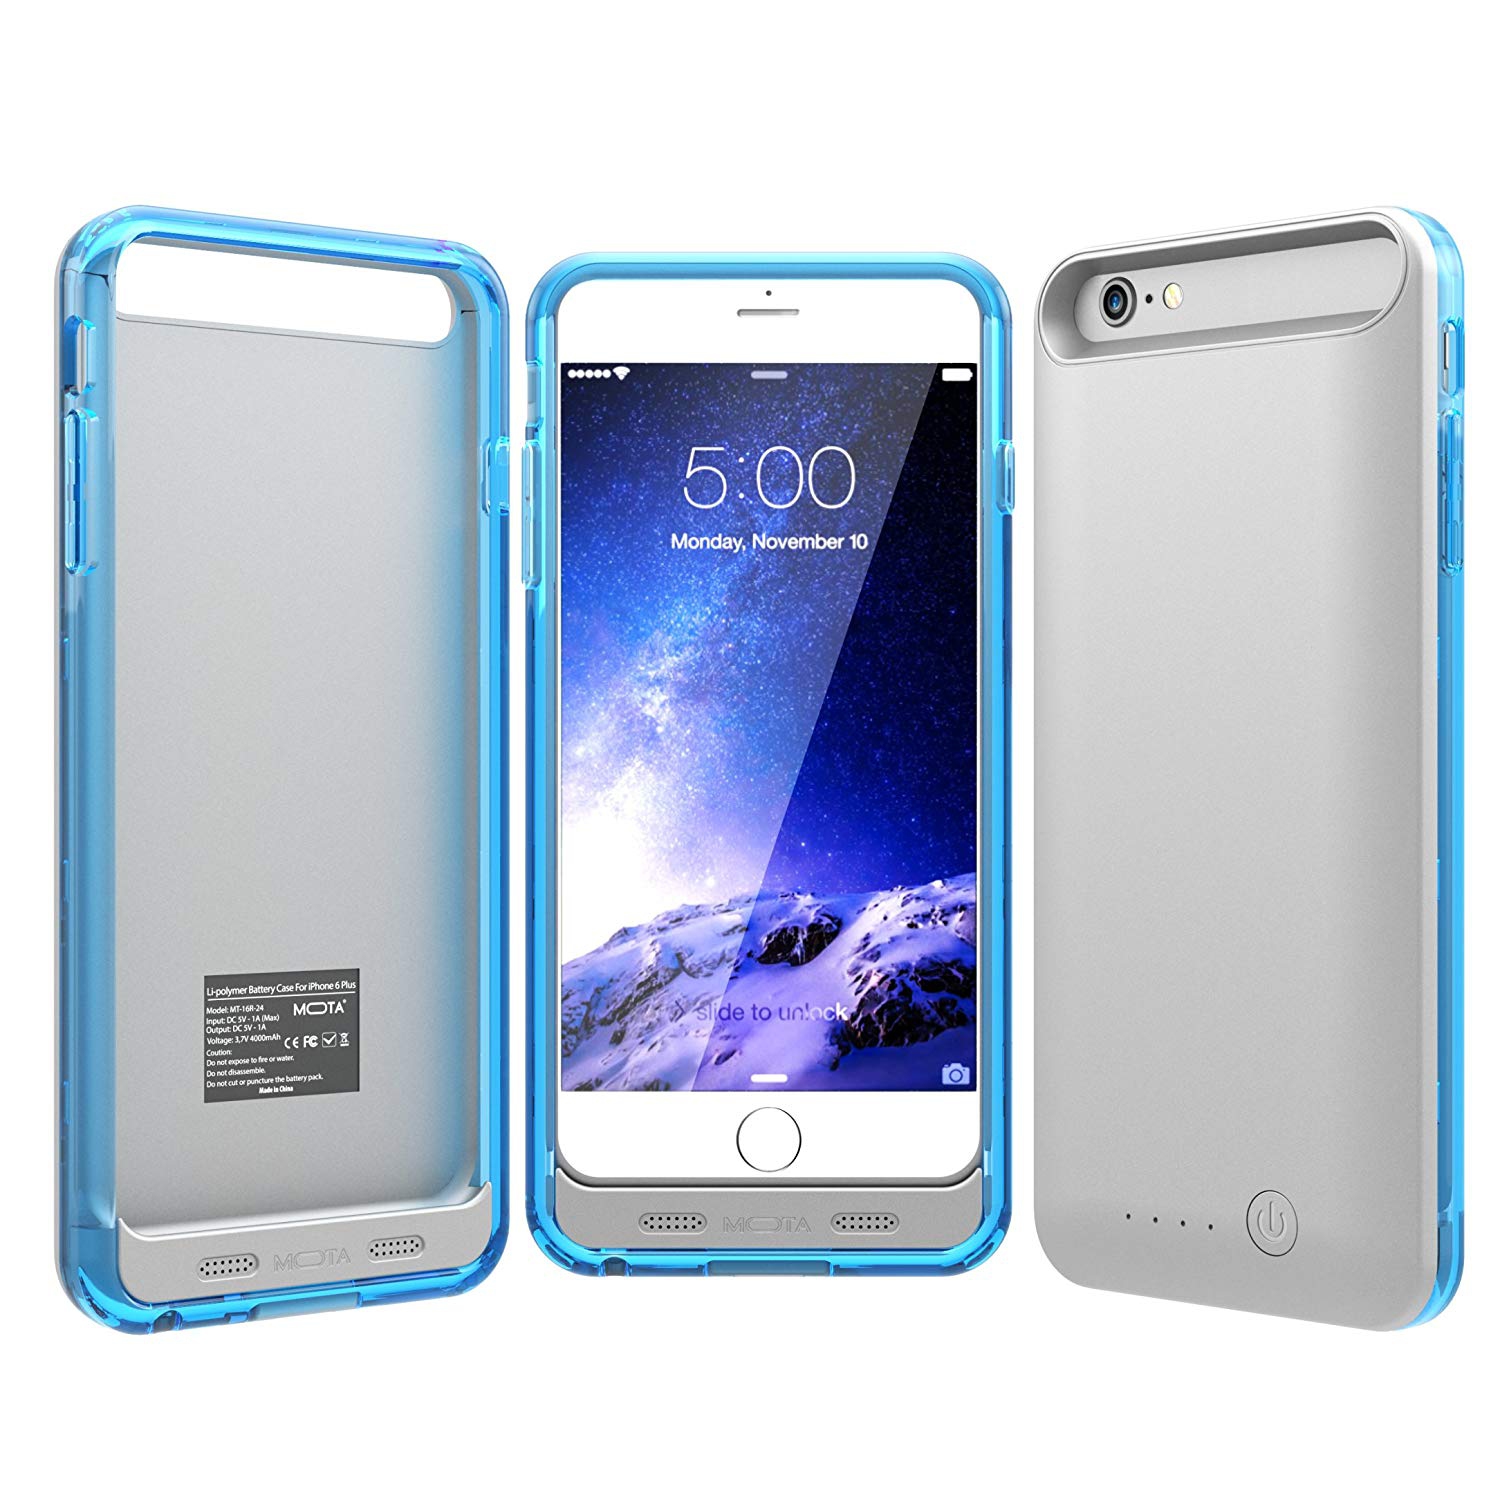 Mota Tamo Extended Battery Case 4000 mAh for iPhone 6 Plus/6S Plus